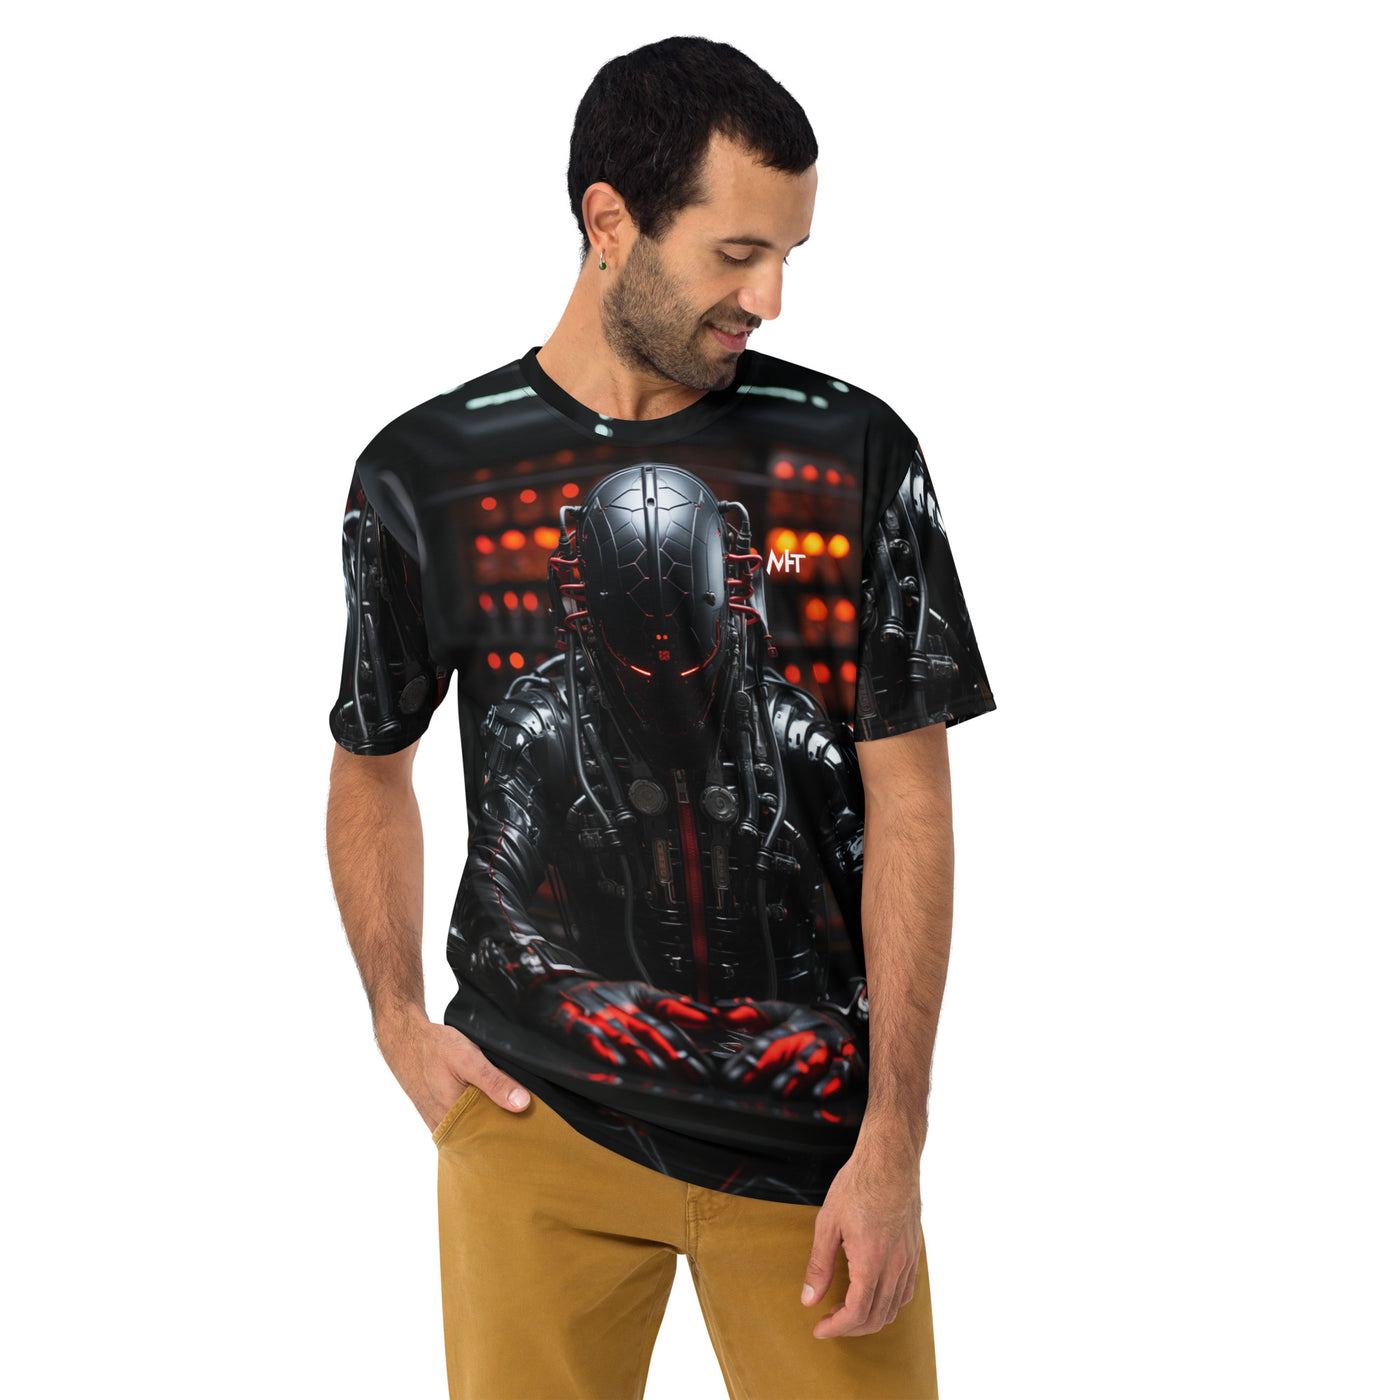 CyberArms Warrior v35 - Men's t-shirt